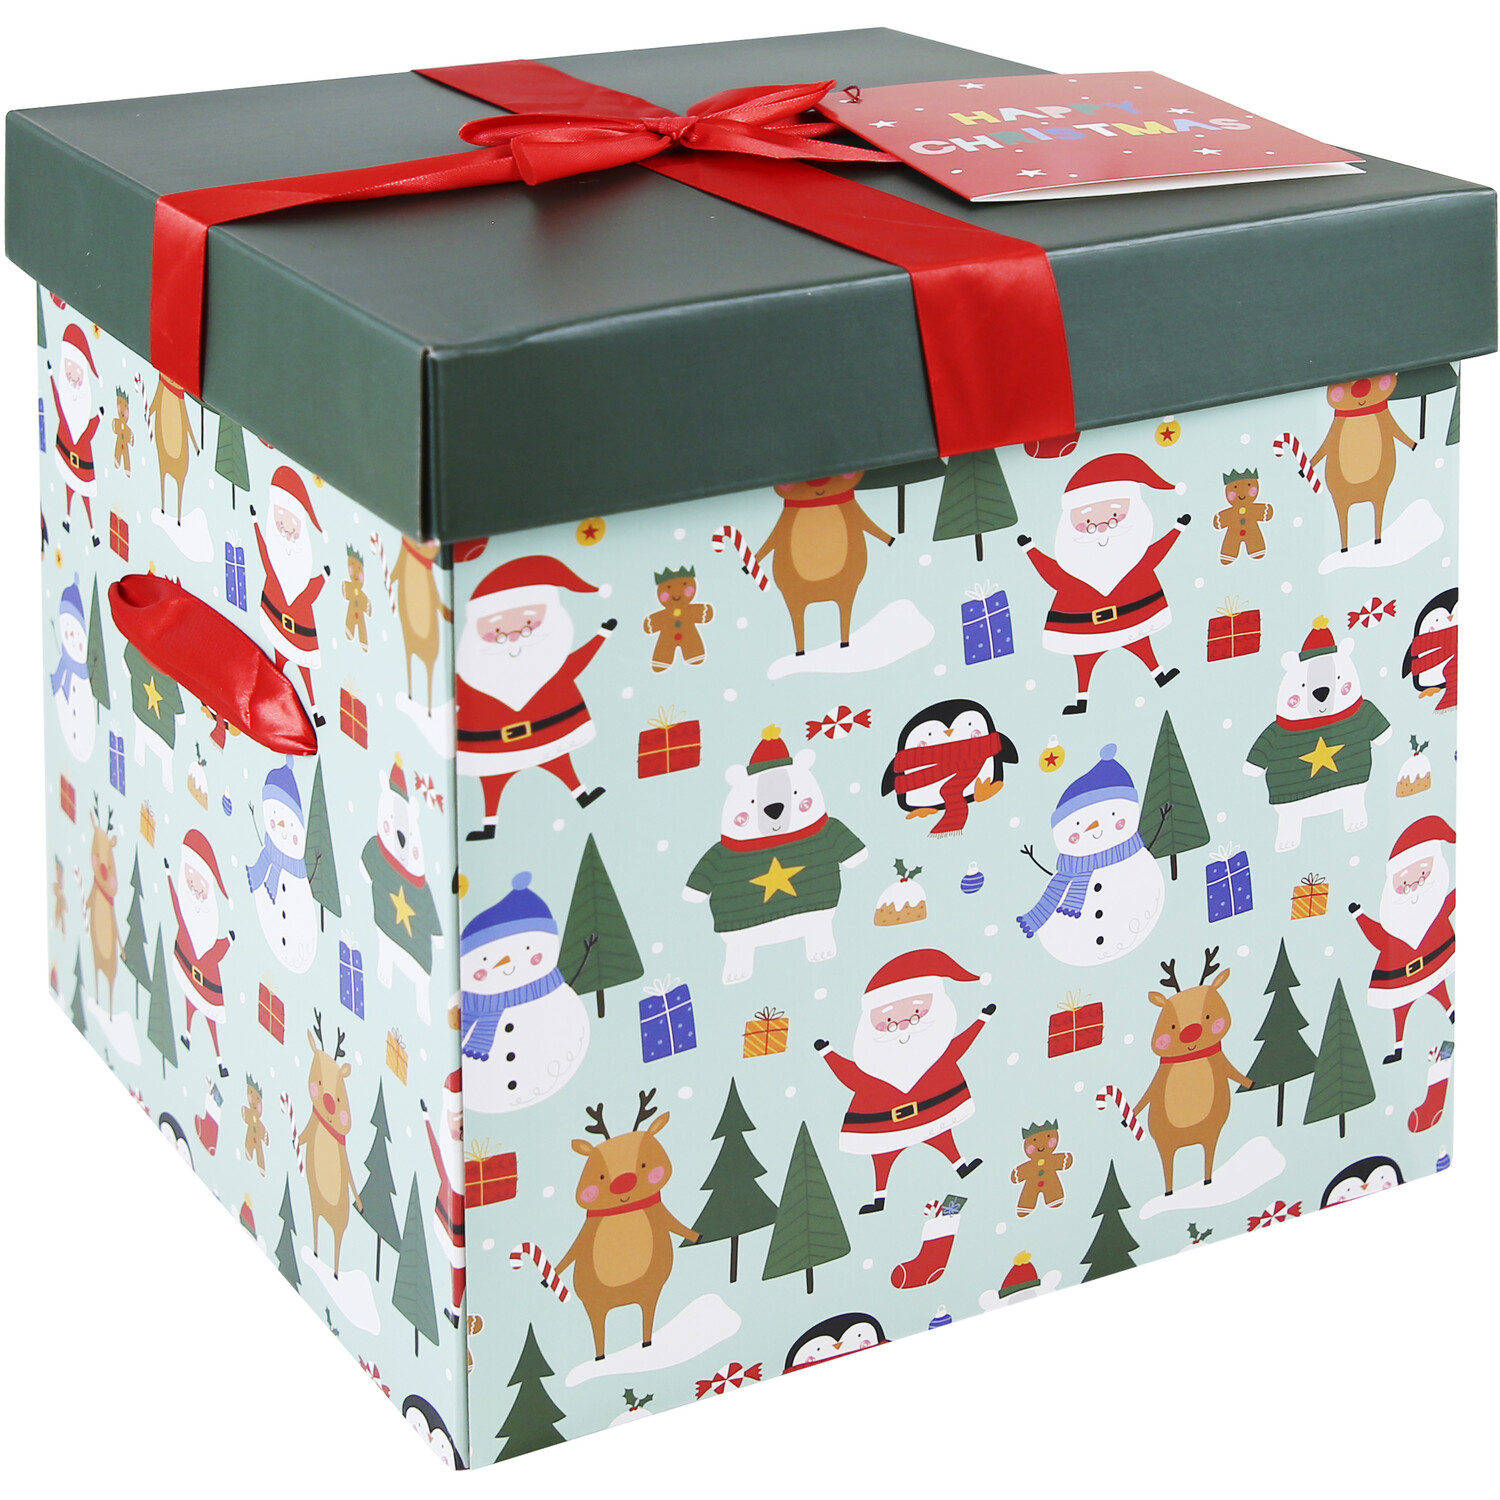 Festive Flat Pack Gift Box - Festive Characters Image 1